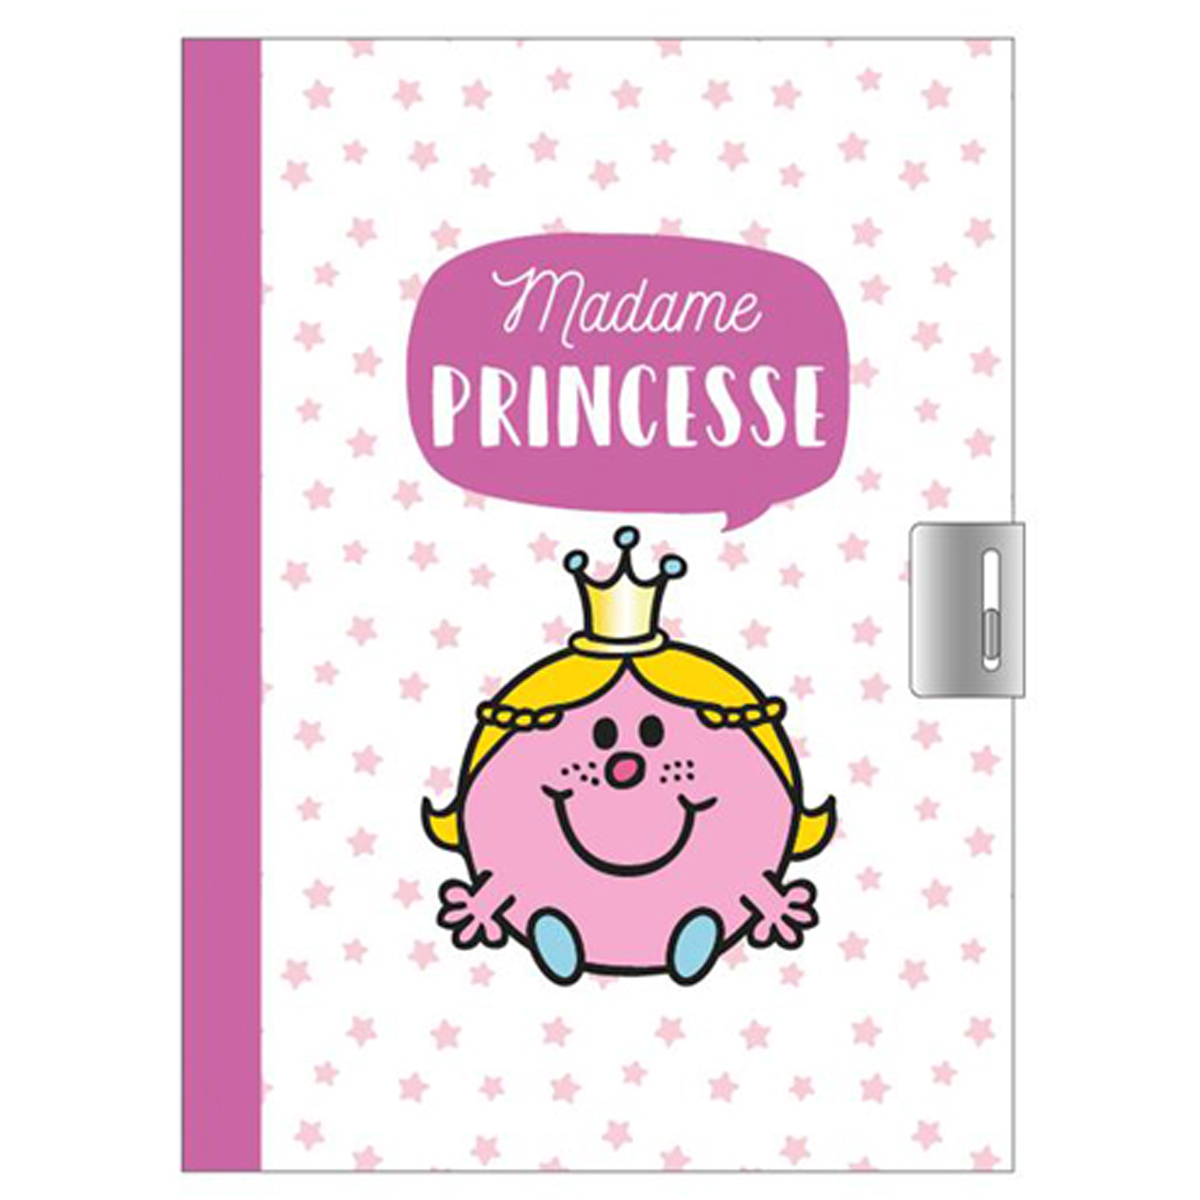 Journal Intime \'Monsieur Madame\' rose (Mme Princesse) - 17x125 cm - [Q9301]